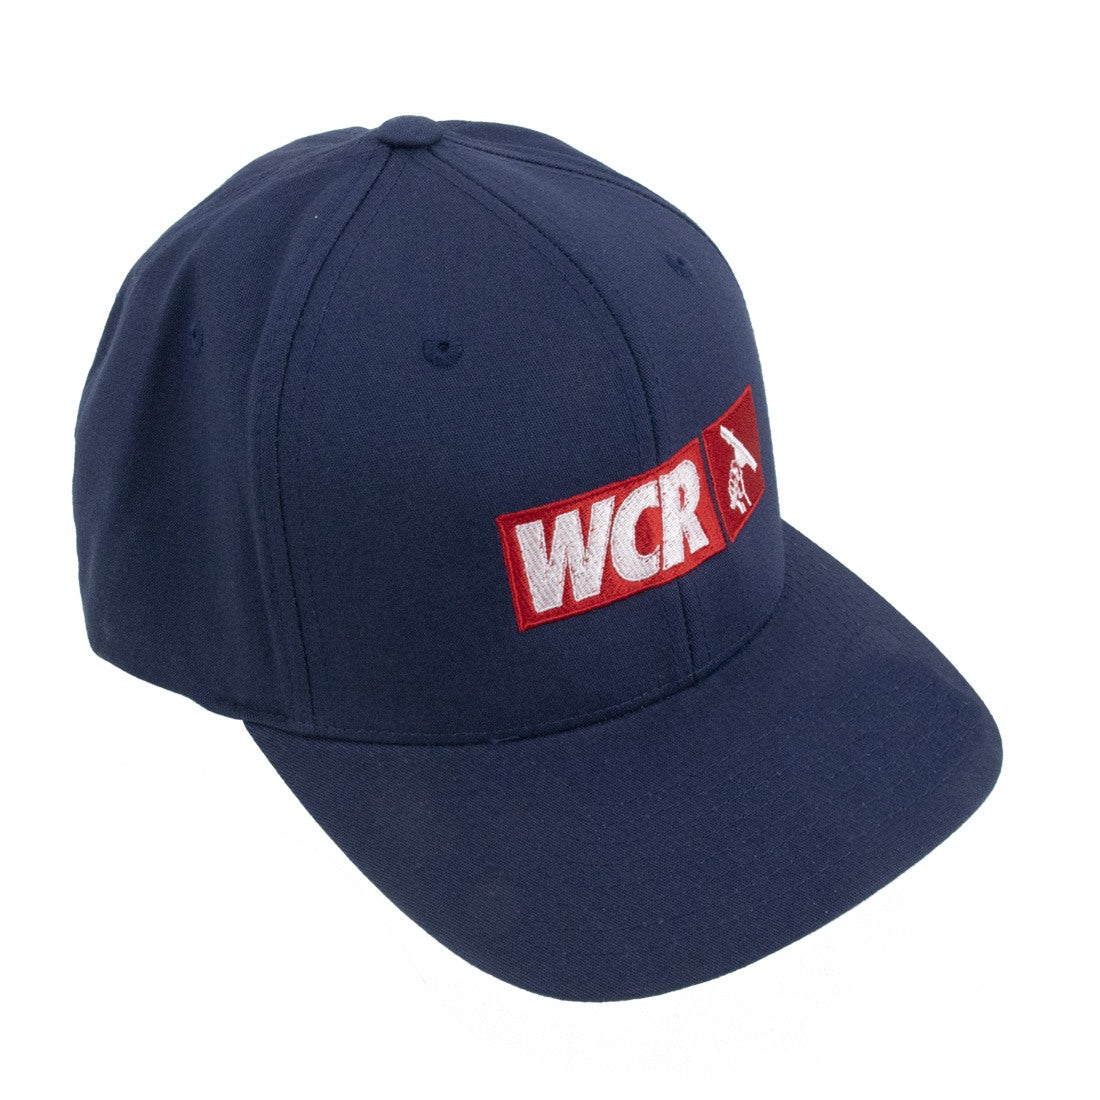 WCR Baseball Cap - L/XL Full View